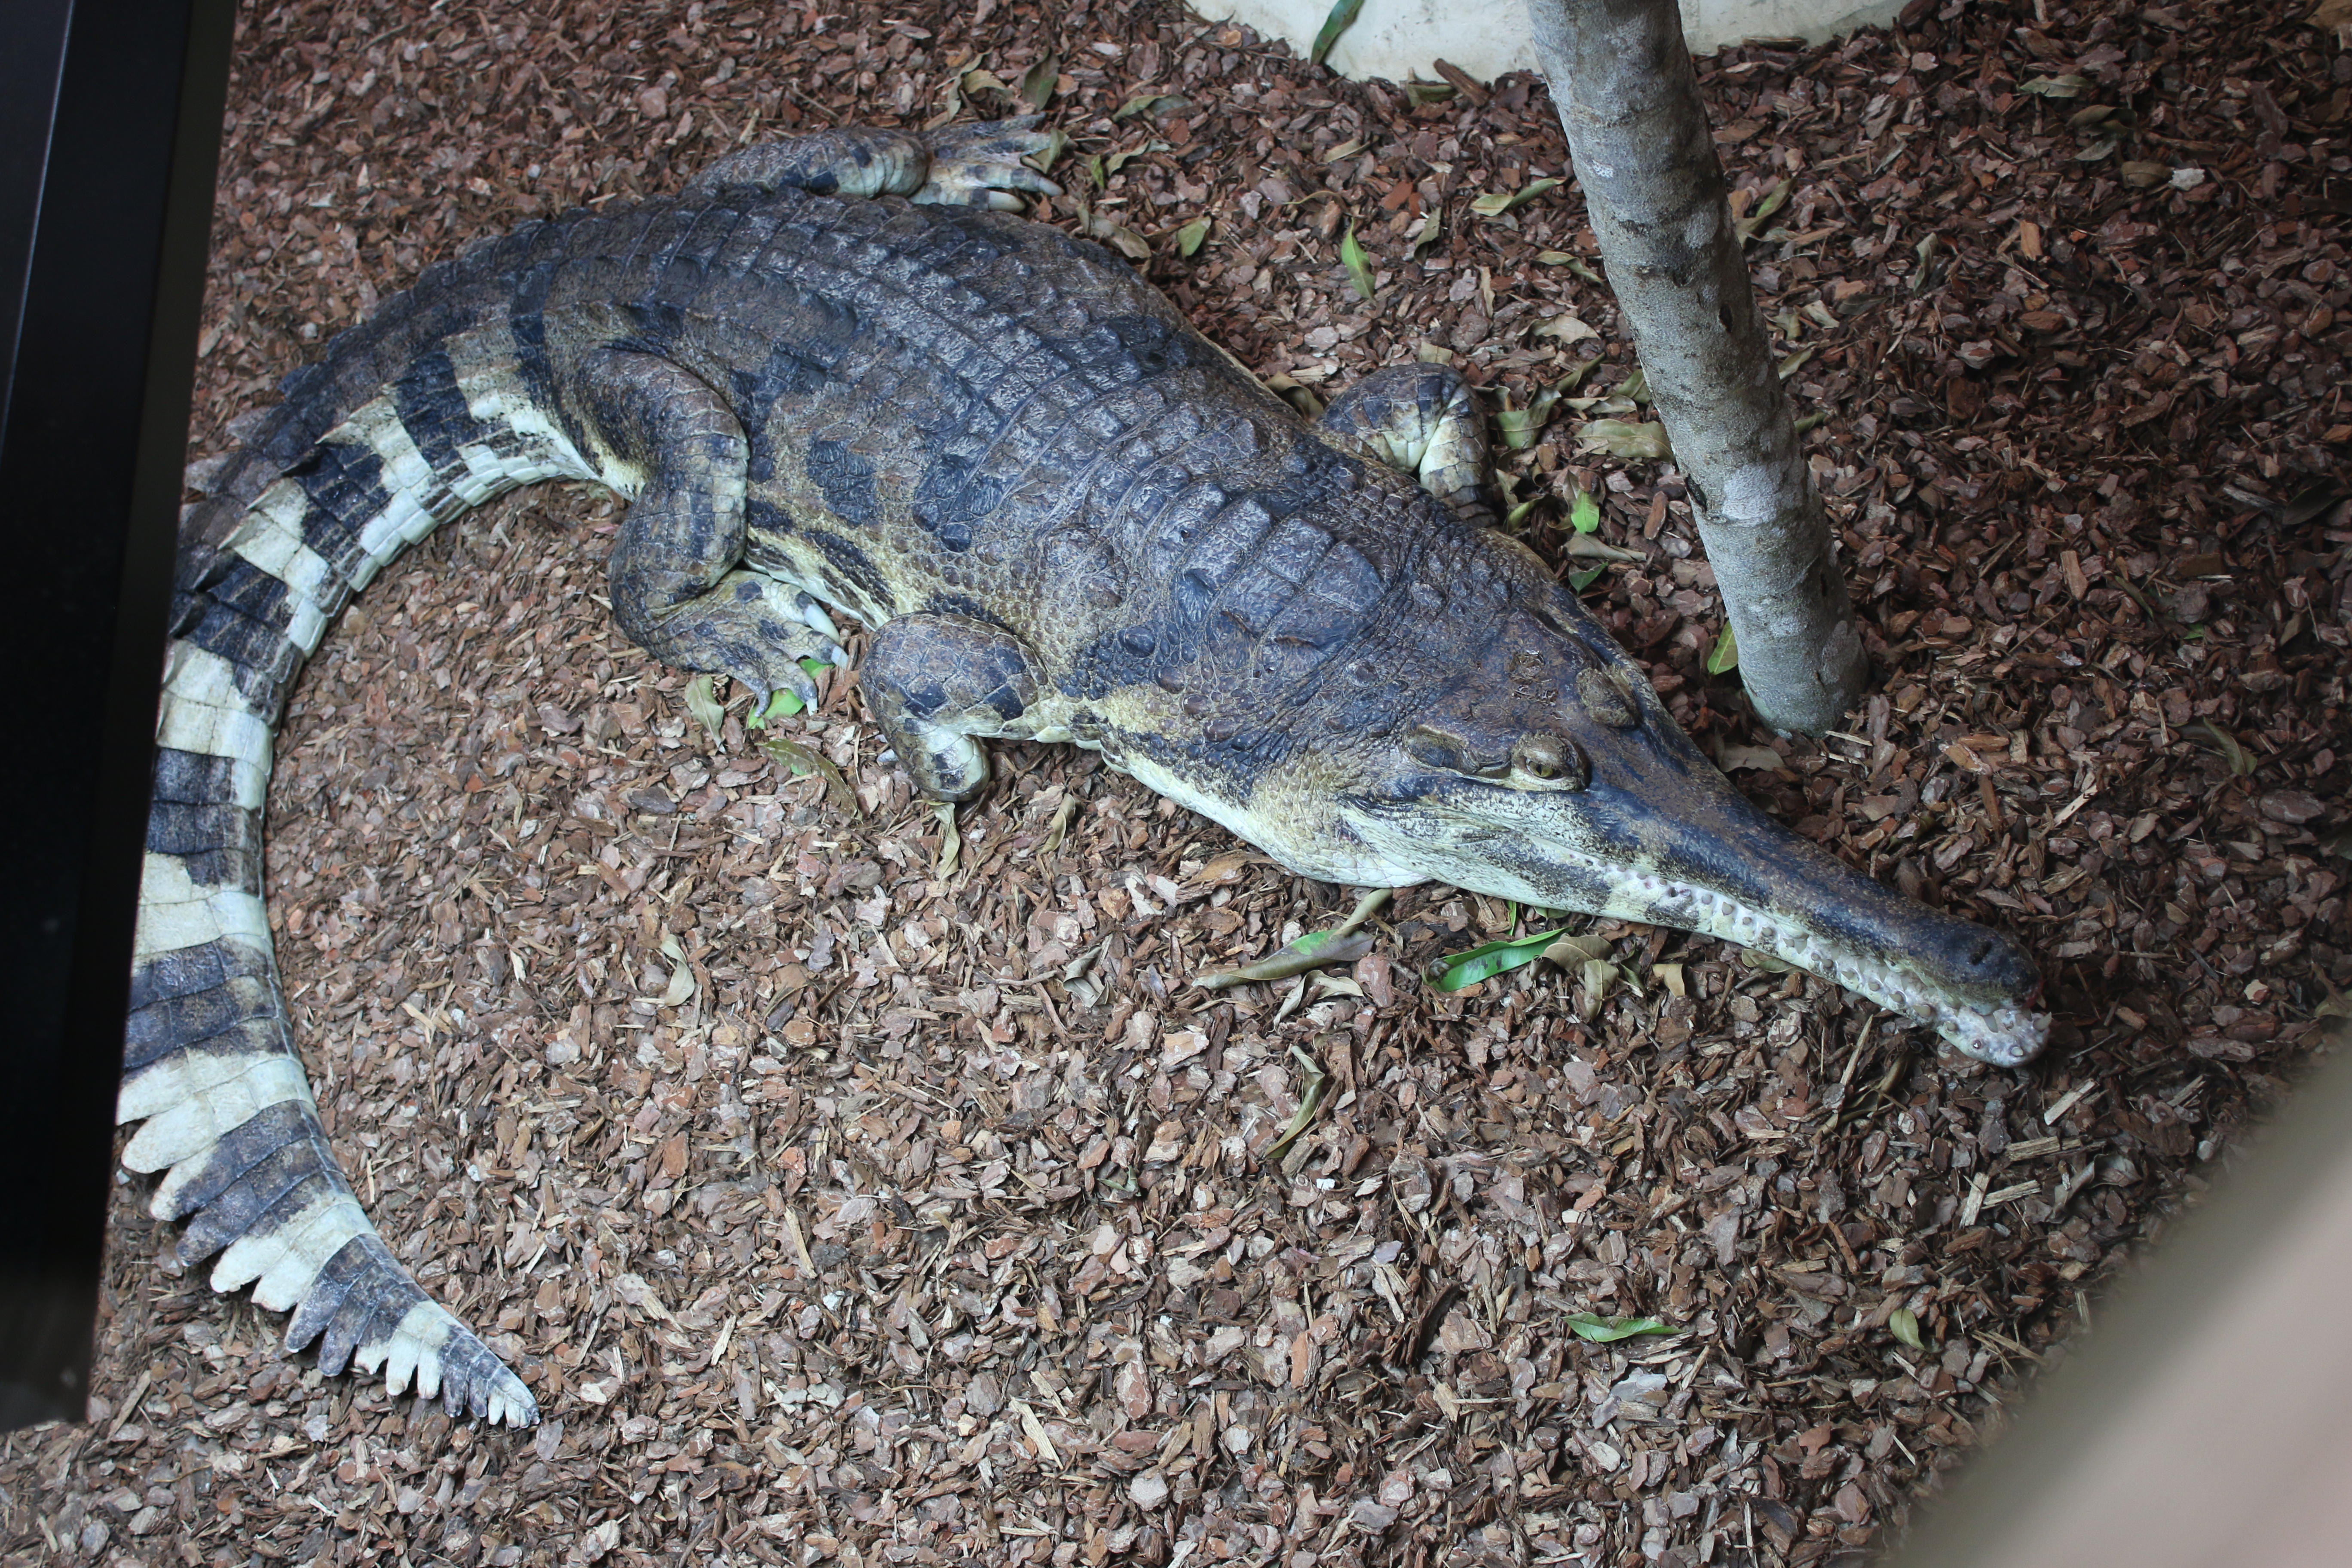 Tomistoma | Crocodiles Of The World